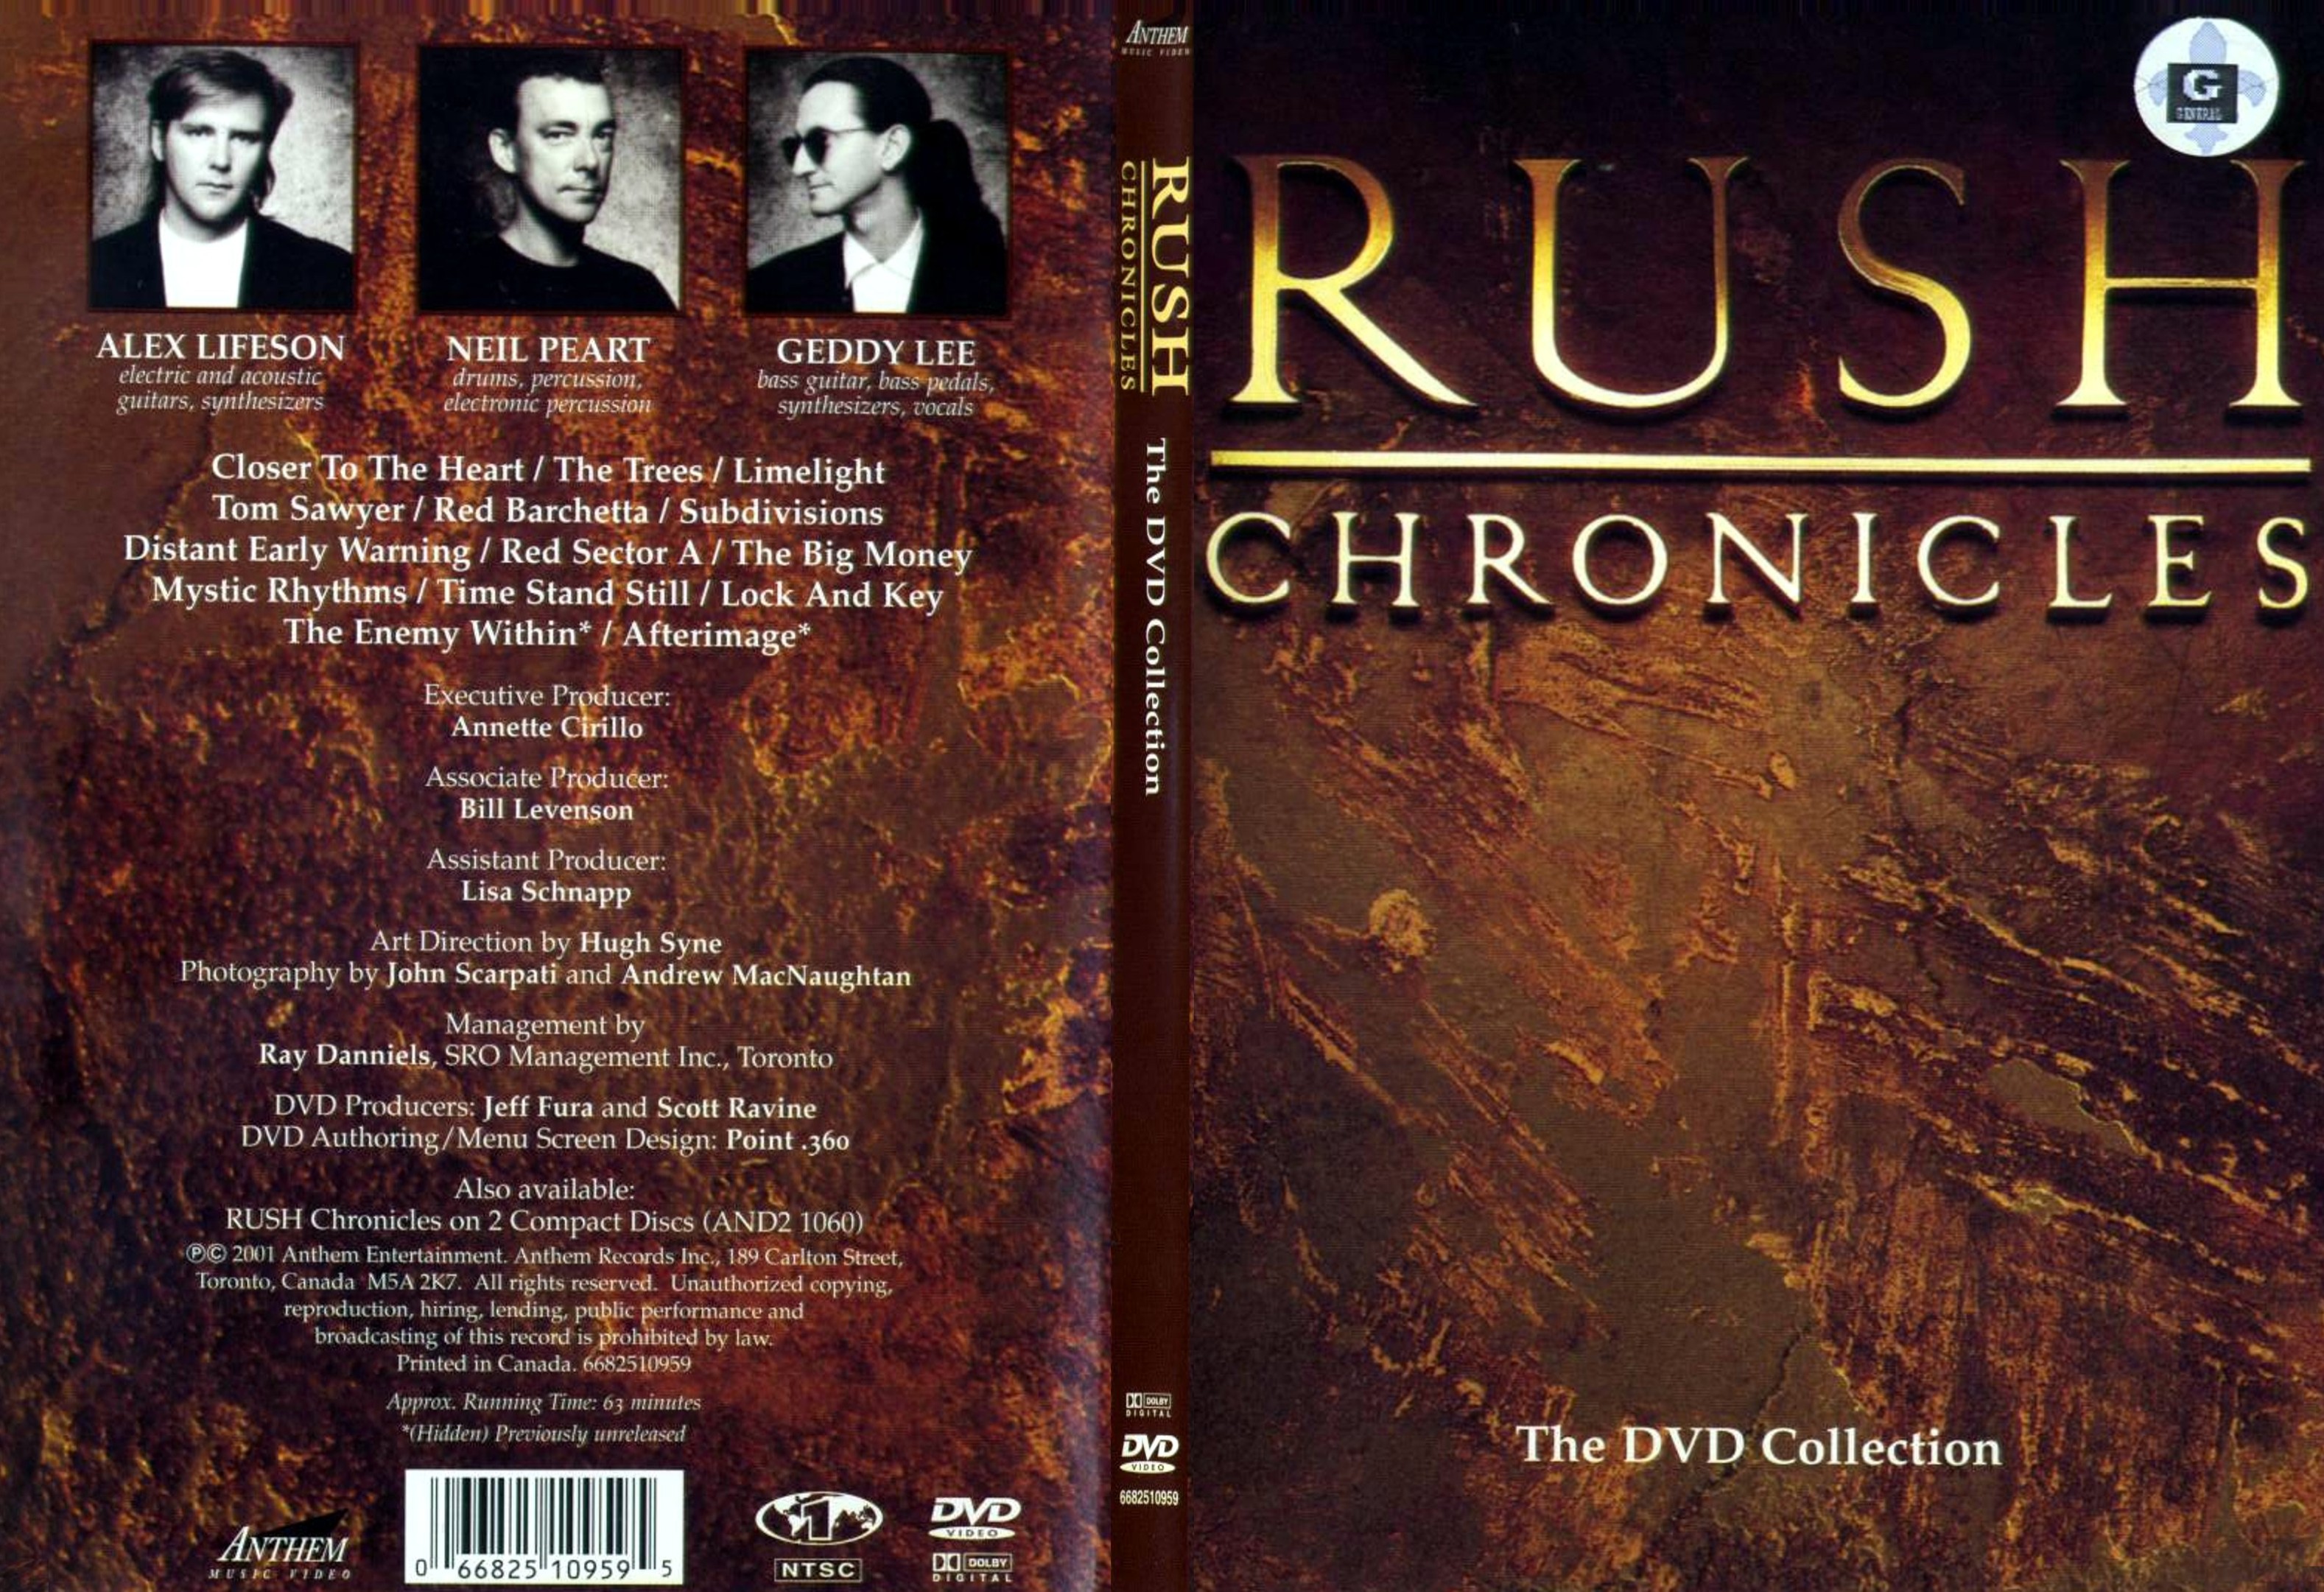 Jaquette DVD Rush chronicles - SLIM